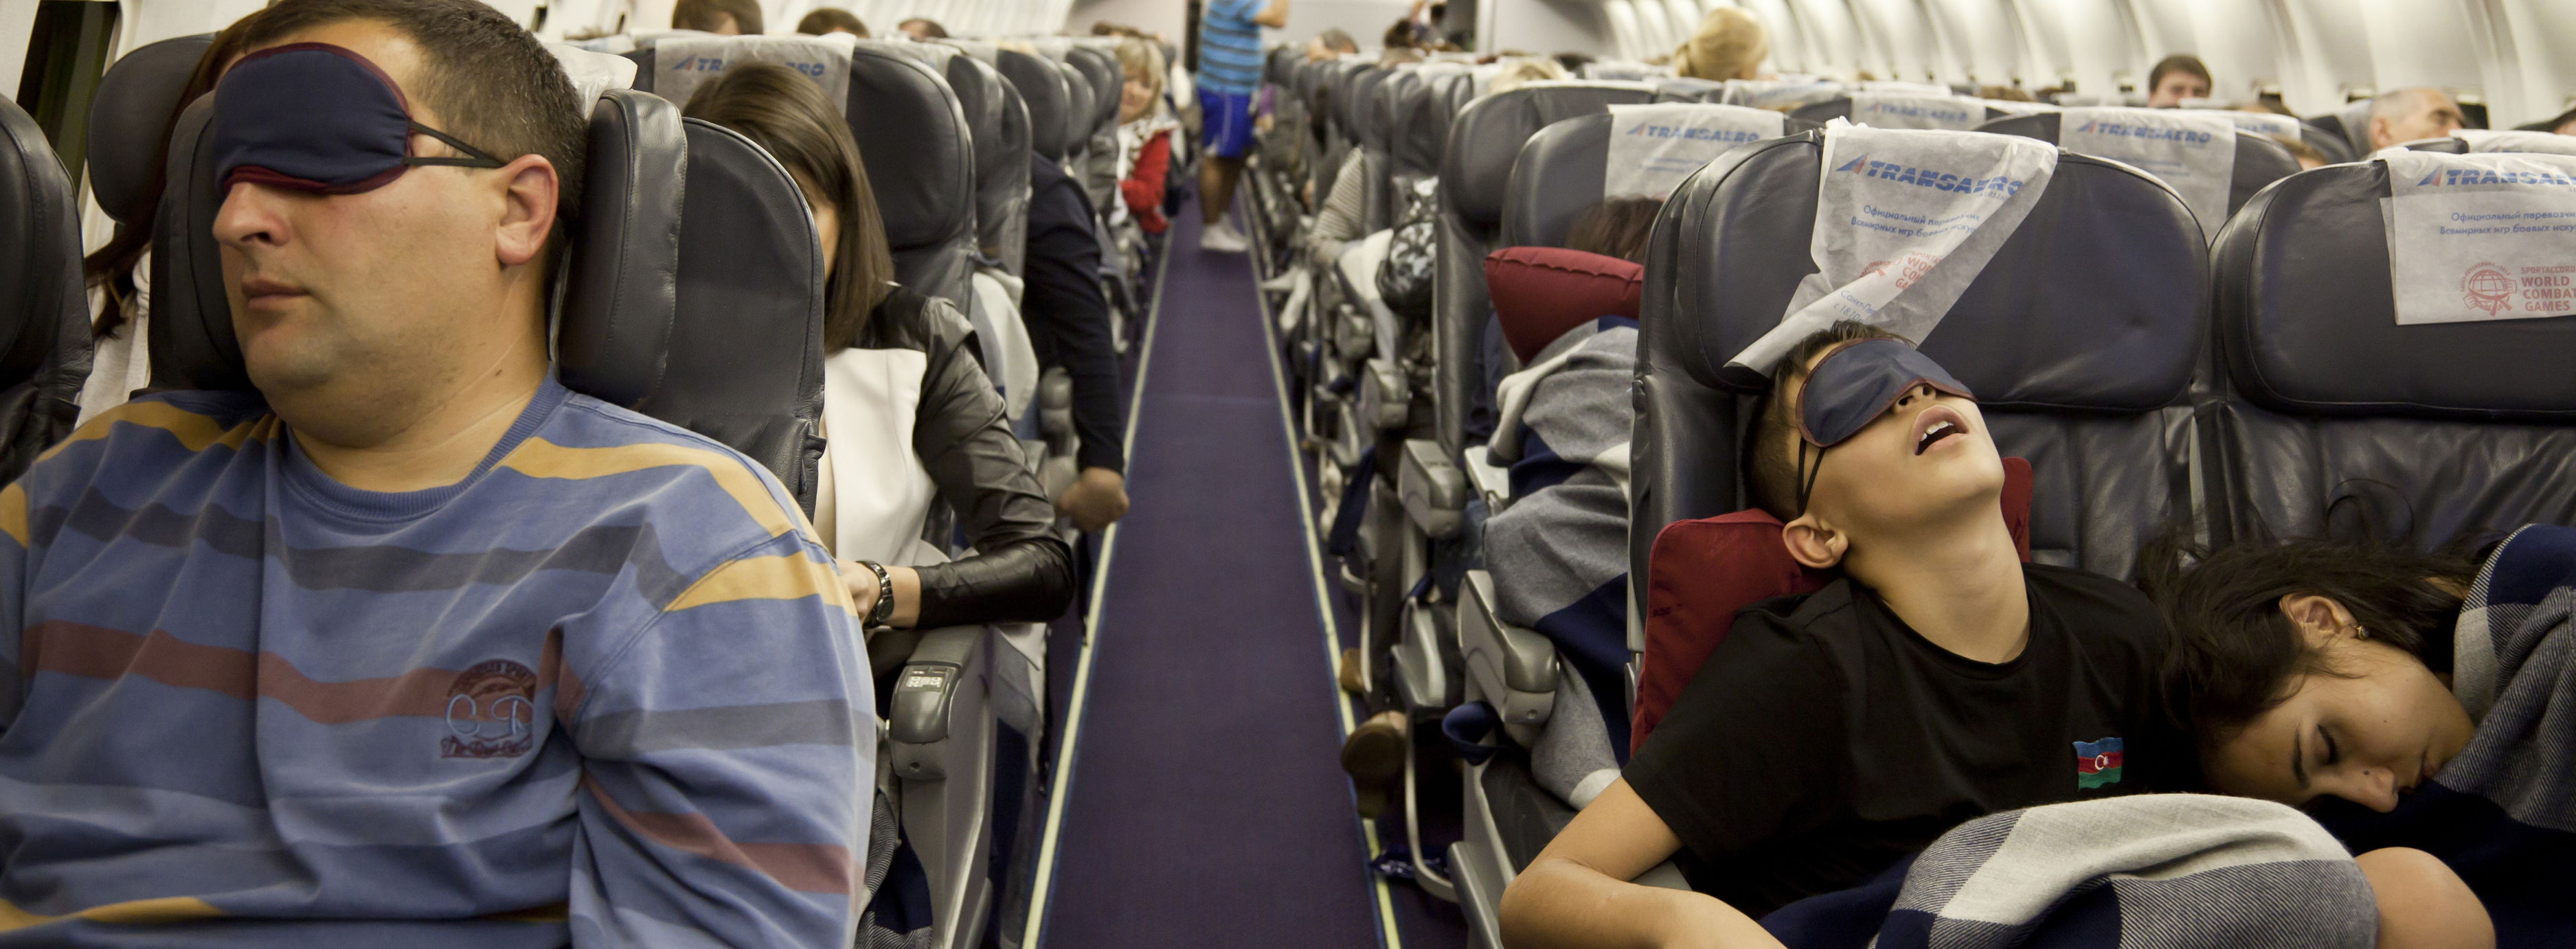 How to Sleep on the Plane: A Guide to Sleep Aids